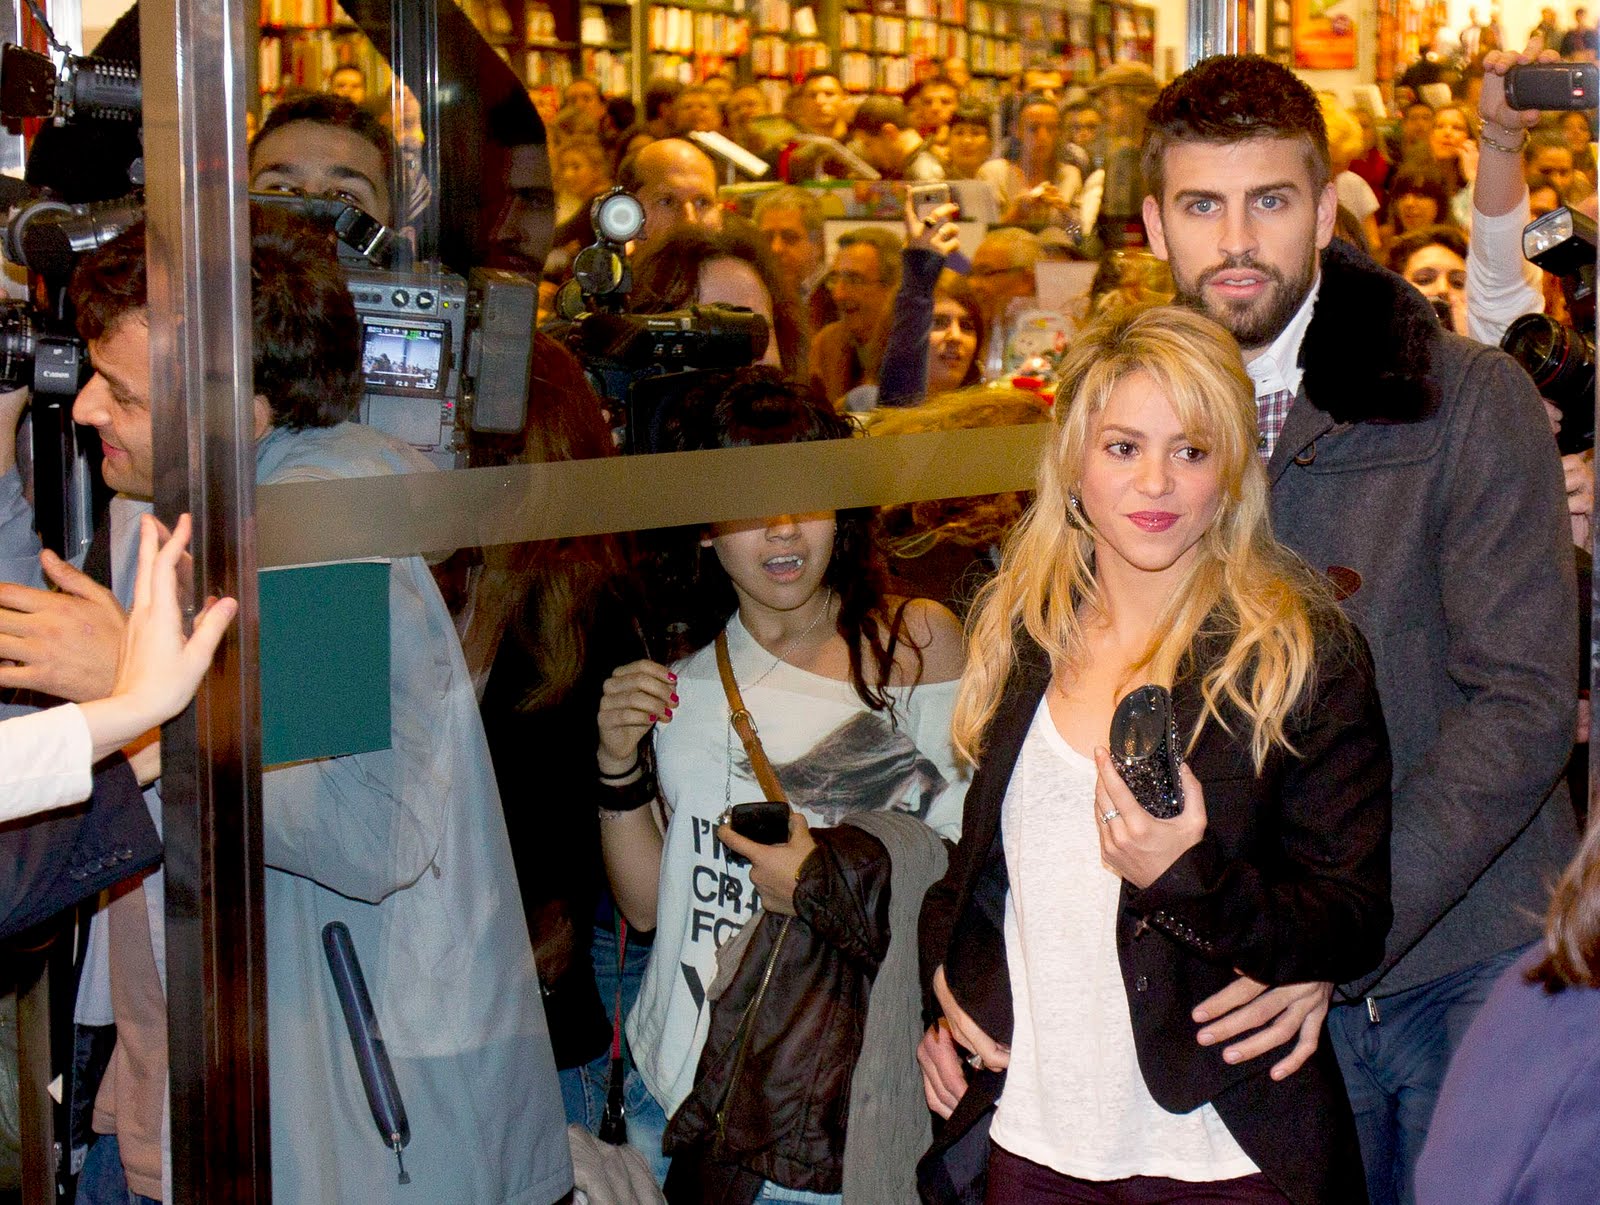 gerard piqué Photo: CU-Shakira and boyfriend-Dues Vides book release.